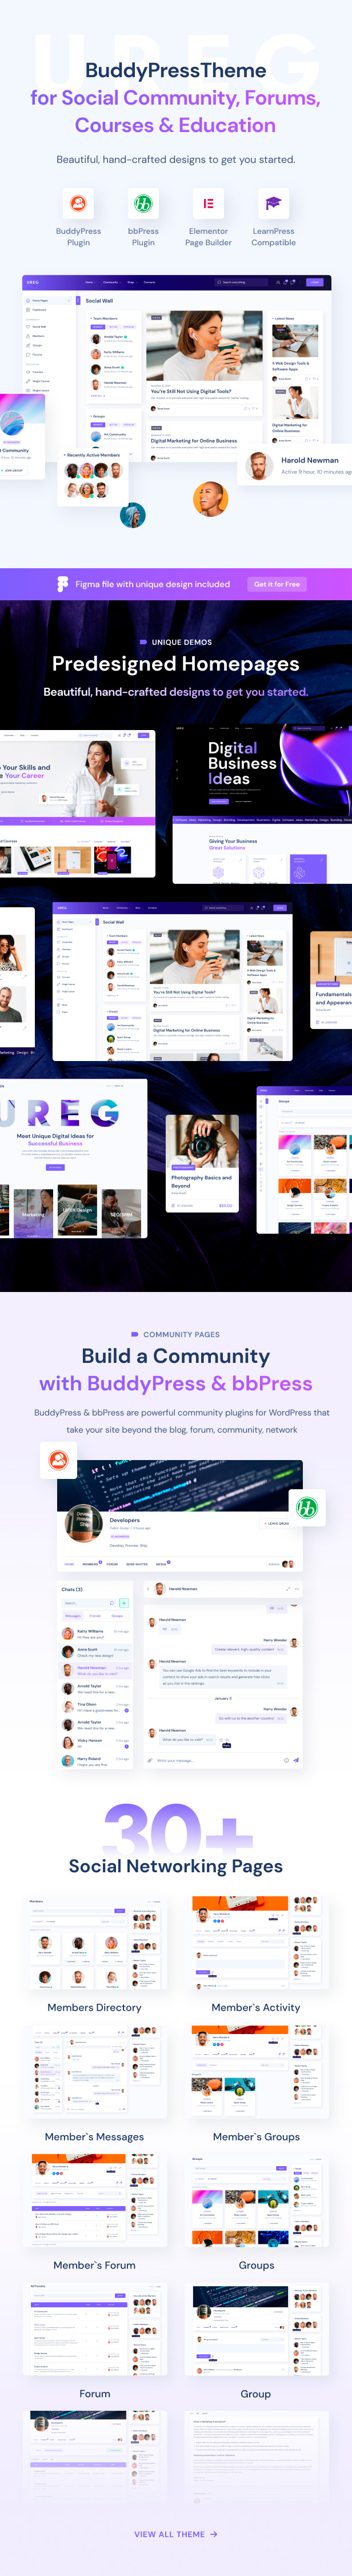 Ureg - BuddyPress & Community WordPress Theme - 2